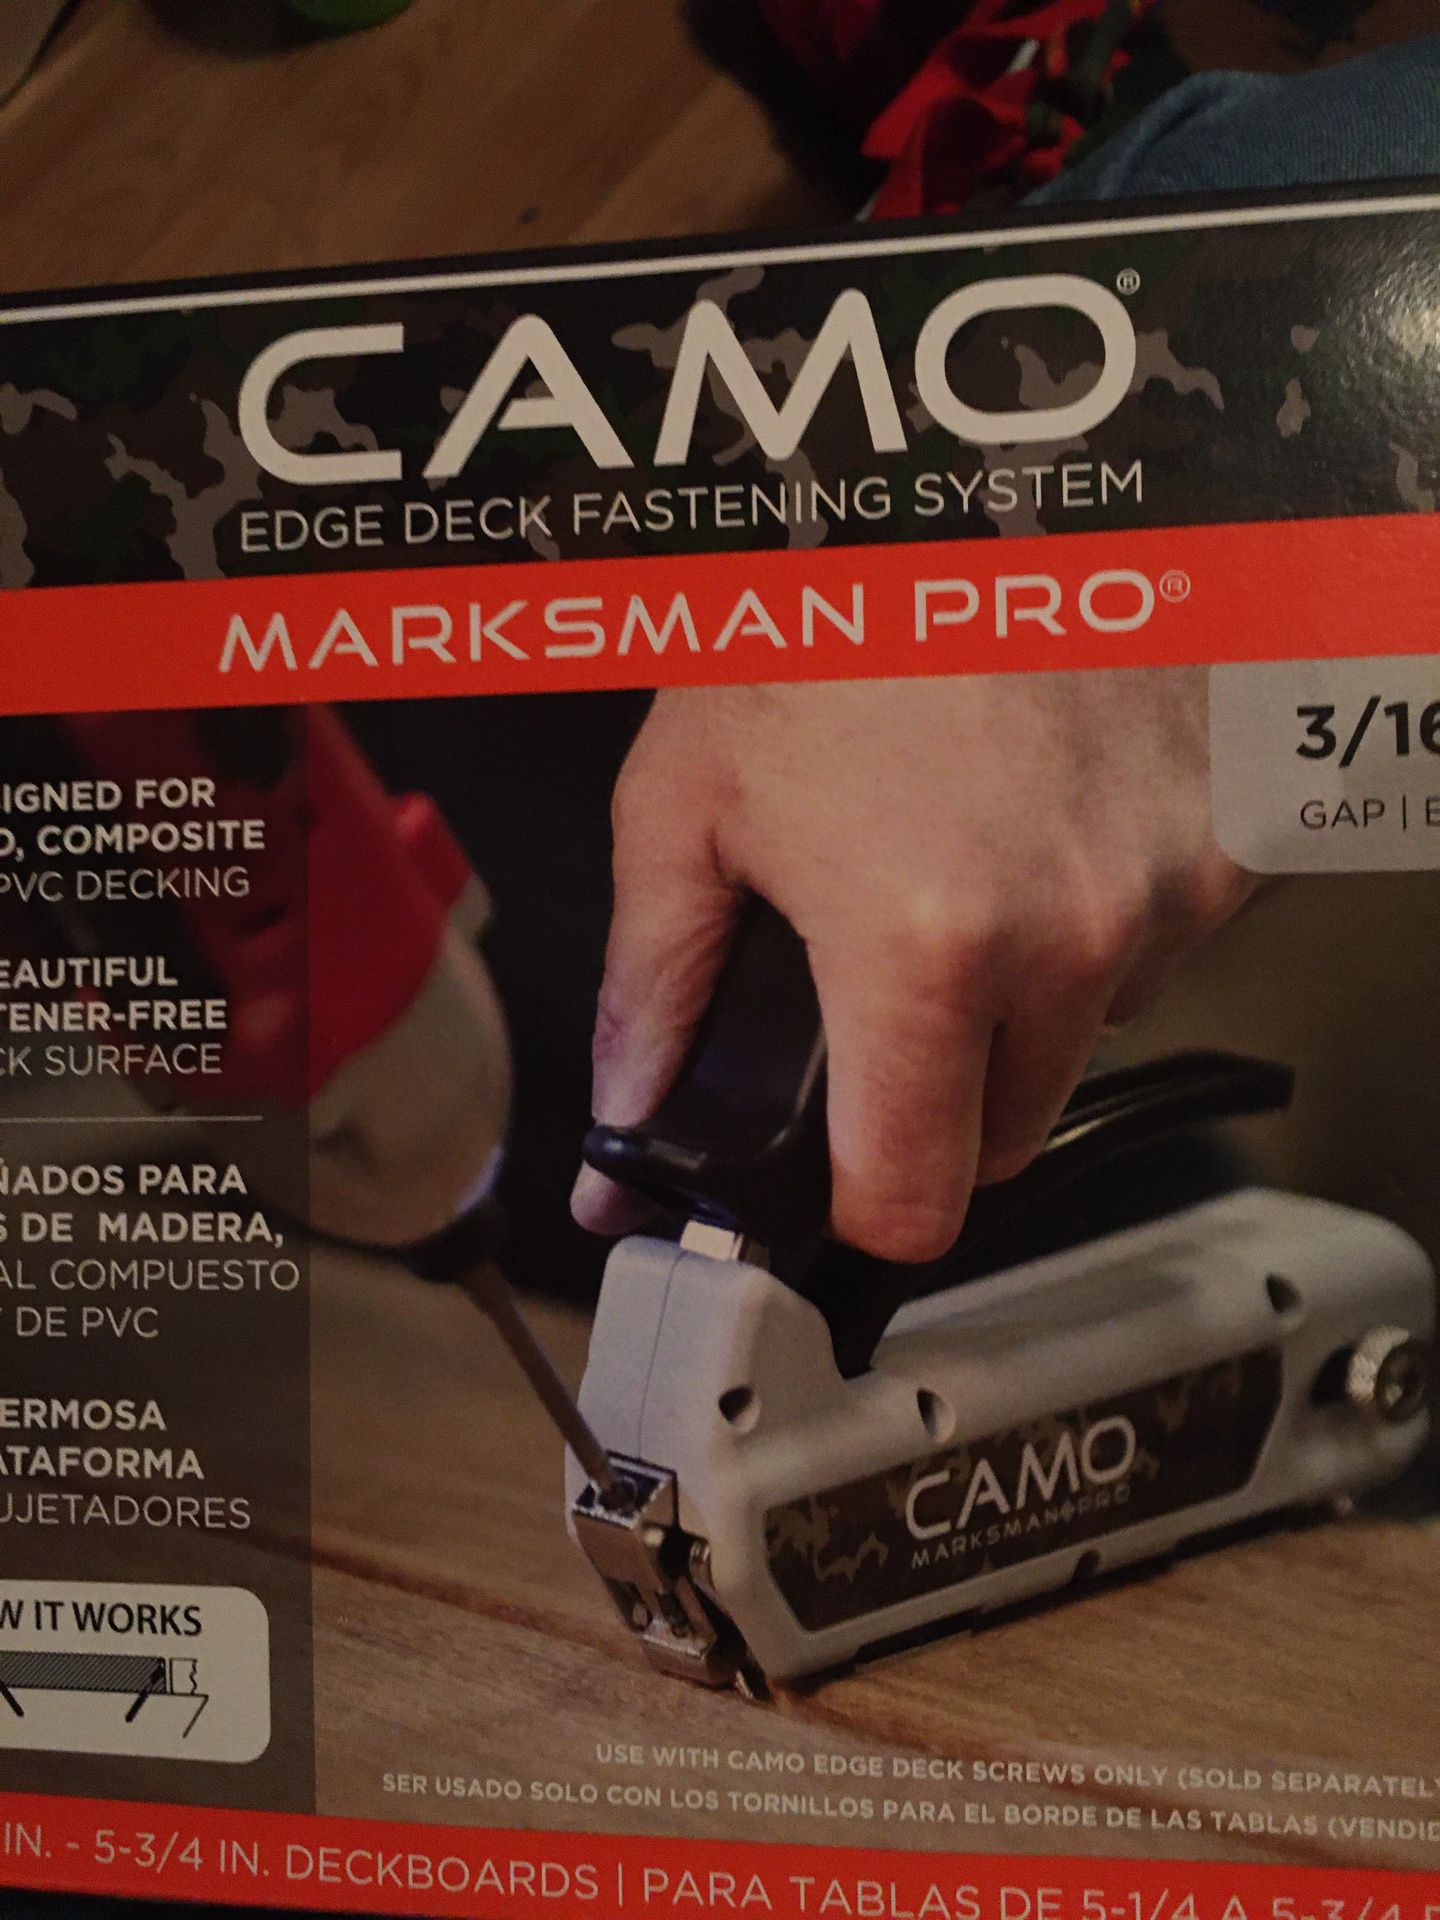 BRANDNEW-NEVER USED-Camo marksman pro $40